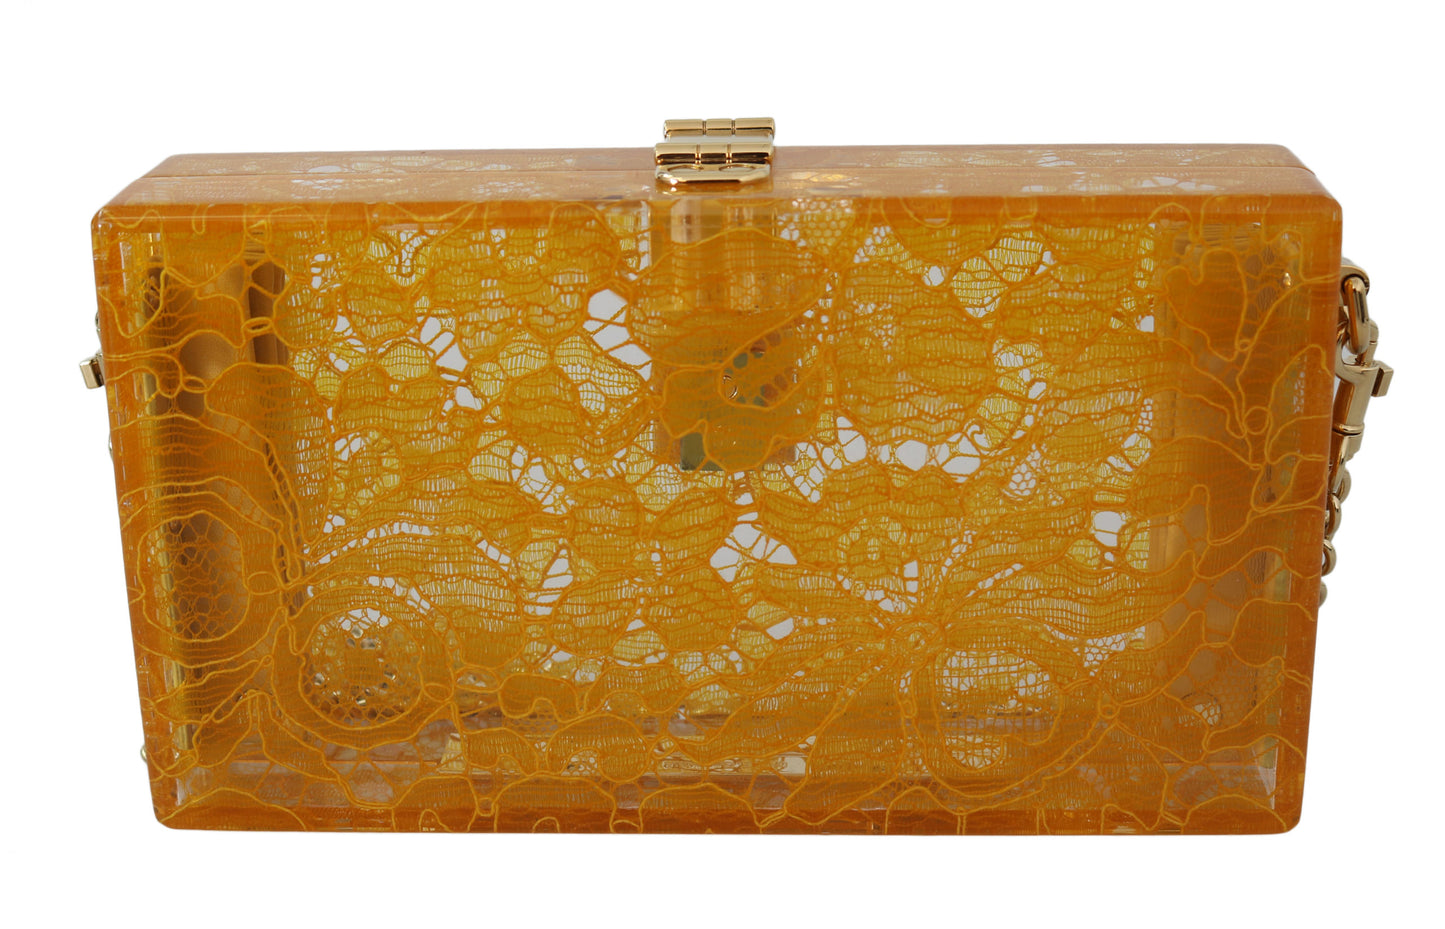 Yellow Plexiglass Taormina Lace Clutch Borse Bag BOX-Dolce & Gabbana-The Socialite Store